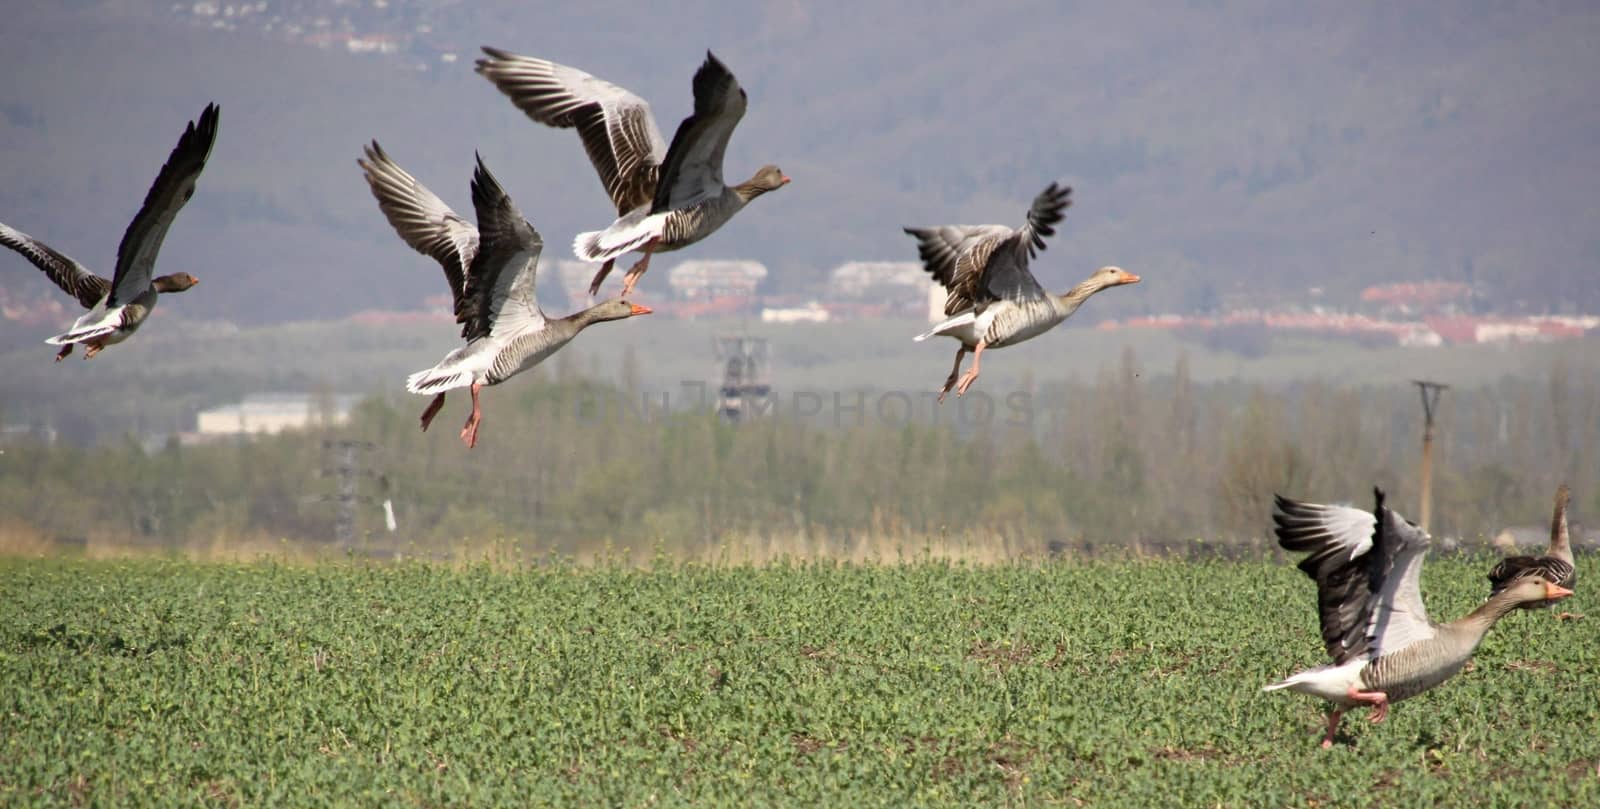 wild geese in flight  by jnerad